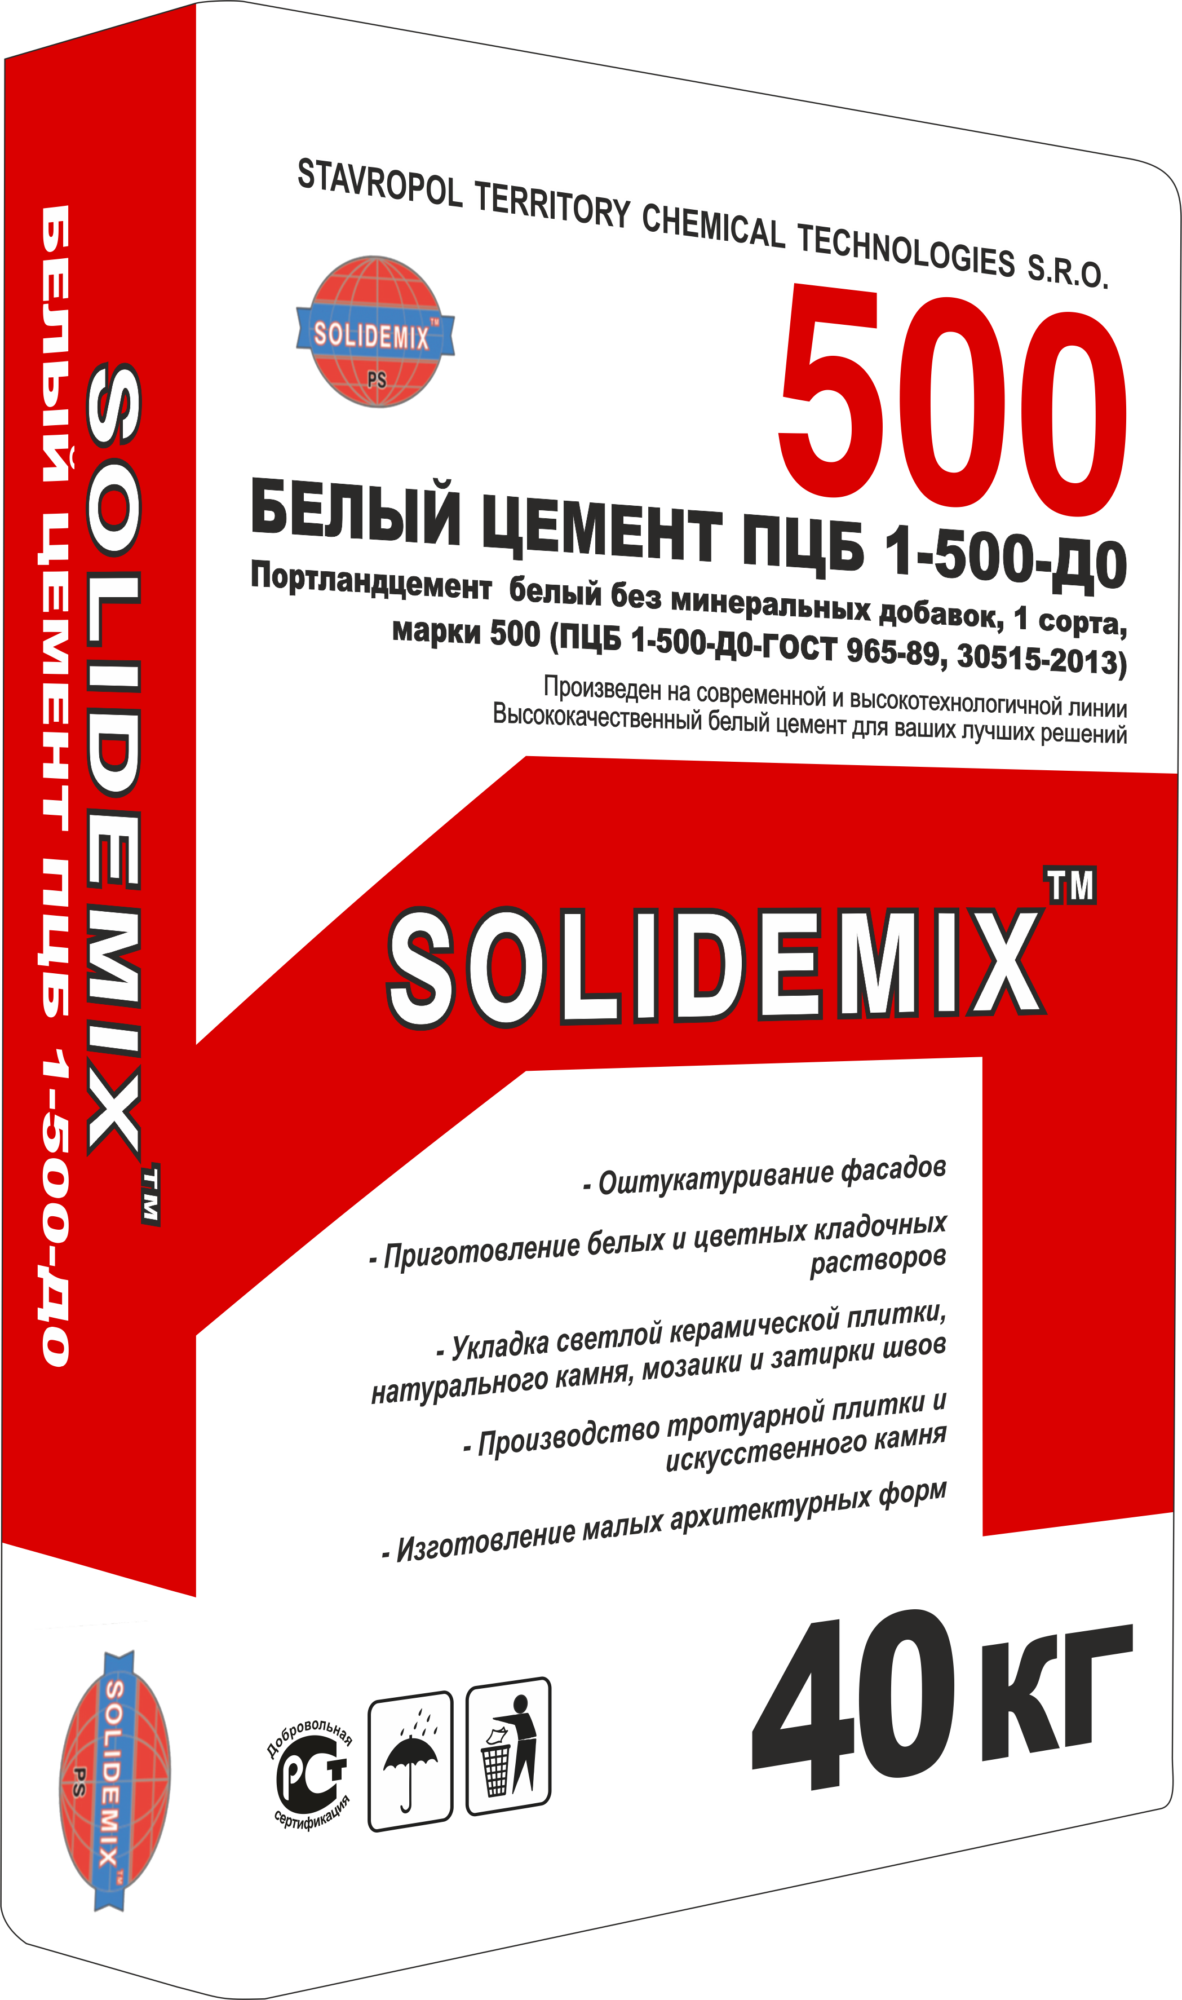 Цемент «SOLIDEMIX 500» БЕЛЫЙ ПЦБ 1-500-Д0